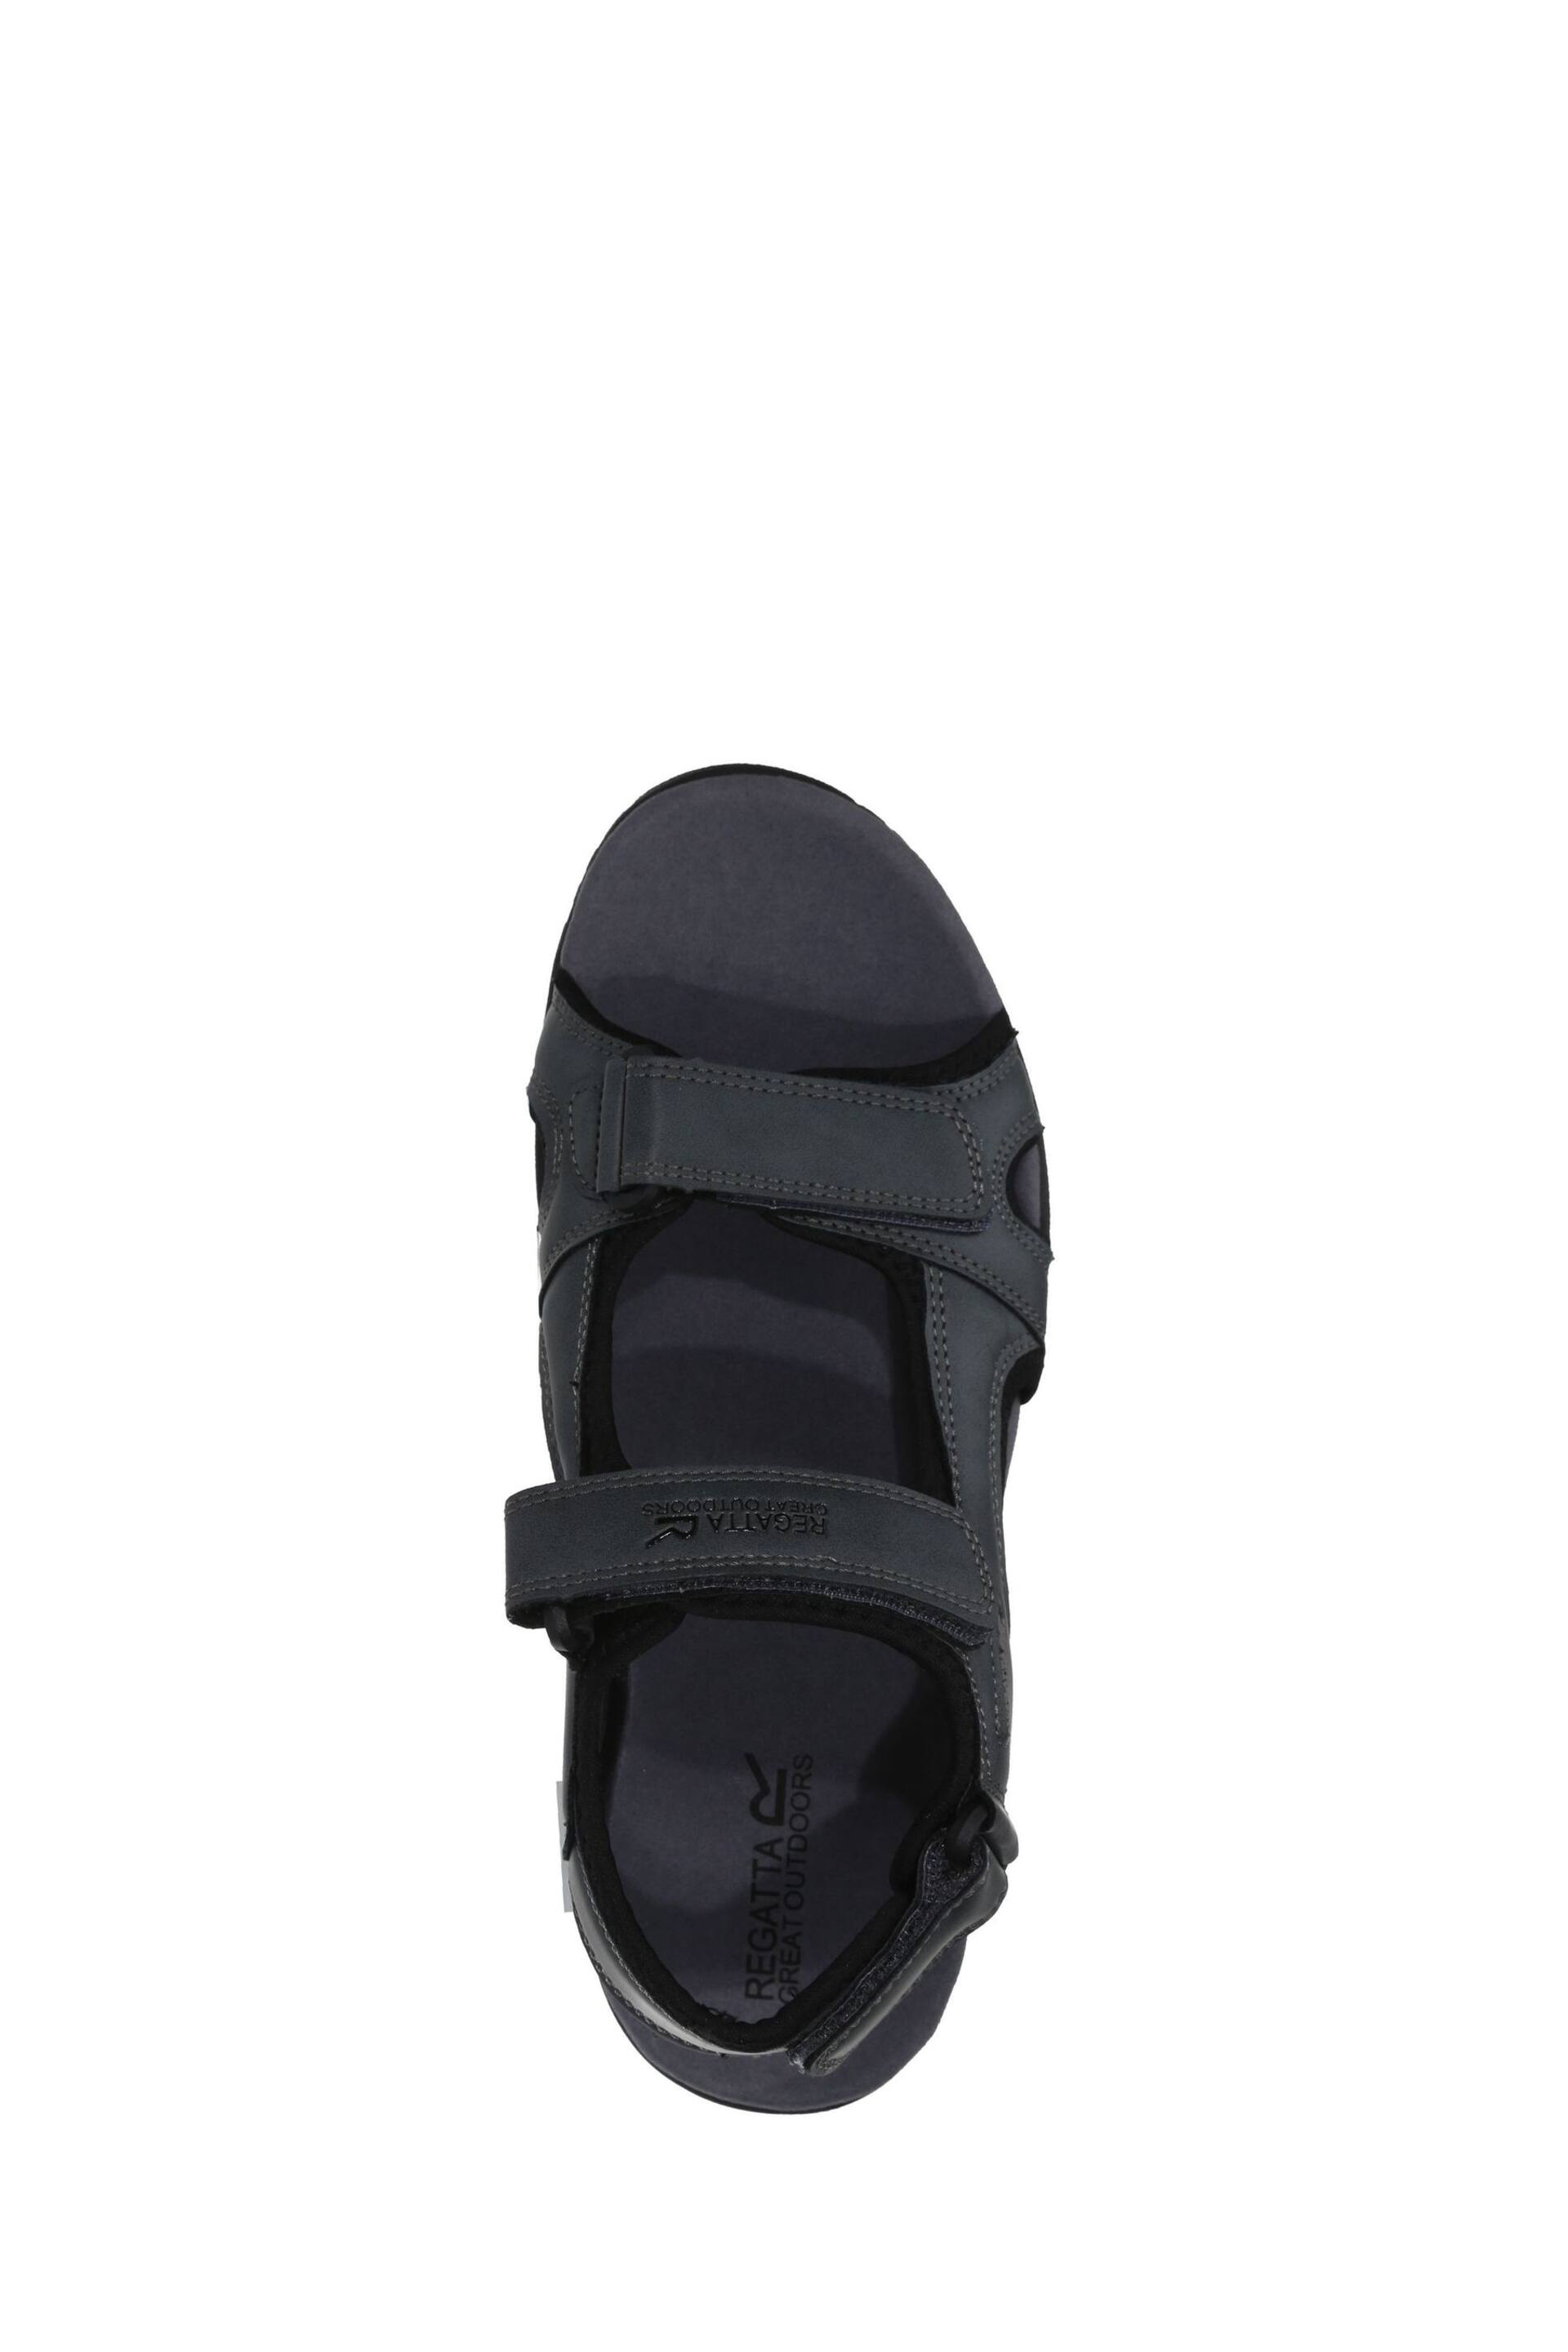 Regatta Grey Comfort Fit Haris Sandals - Image 6 of 6